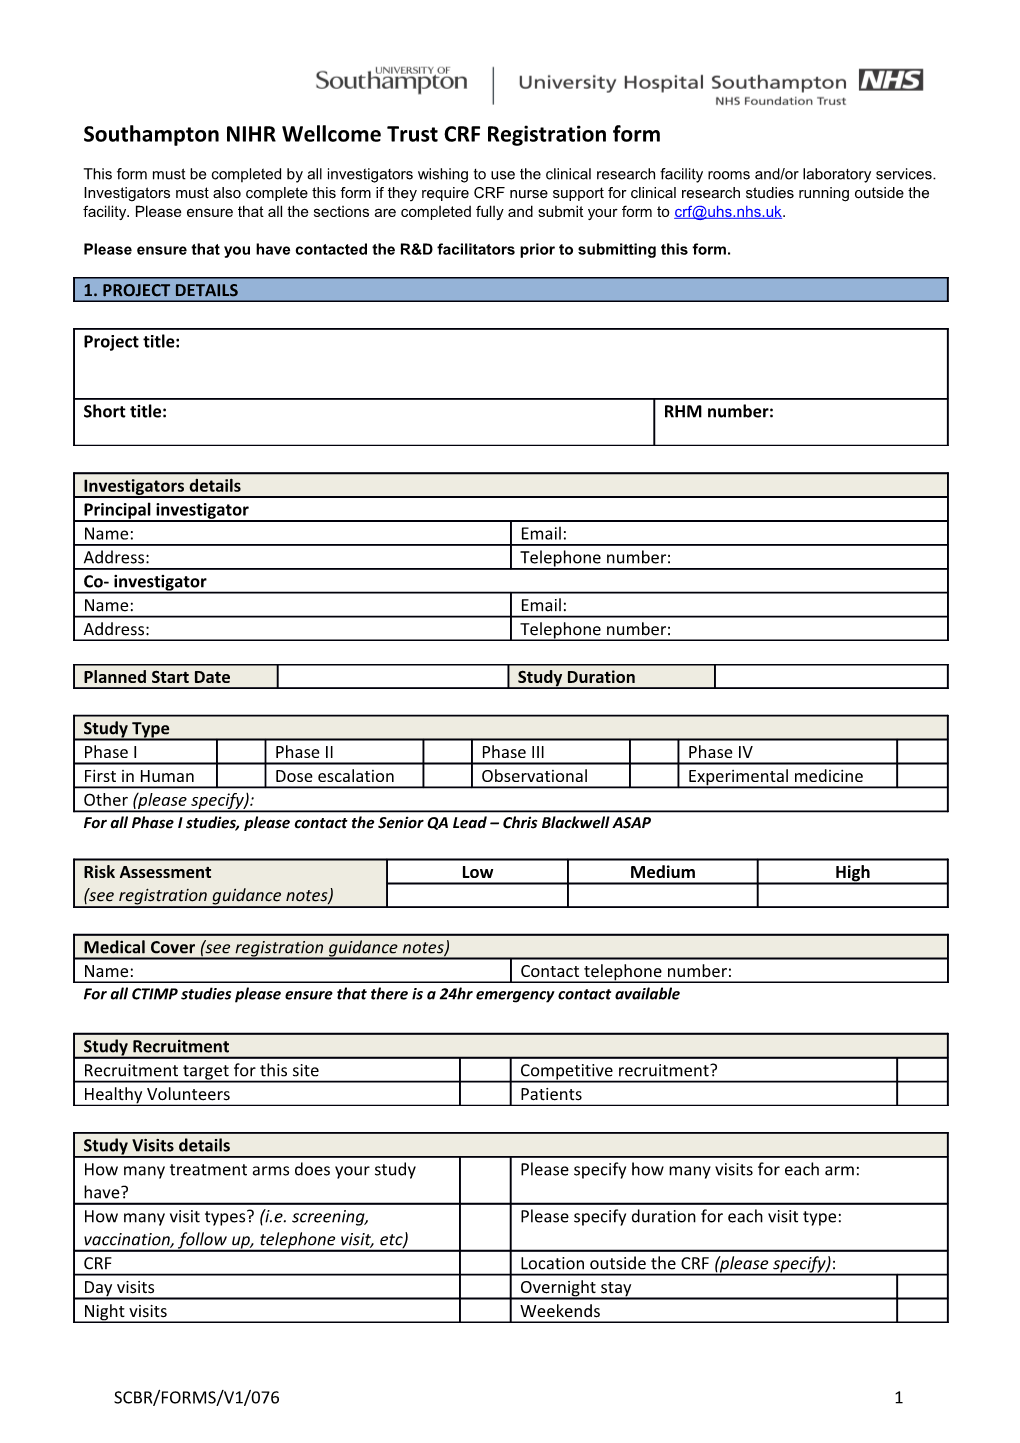 Southampton NIHR Wellcome Trust CRF Registration Form